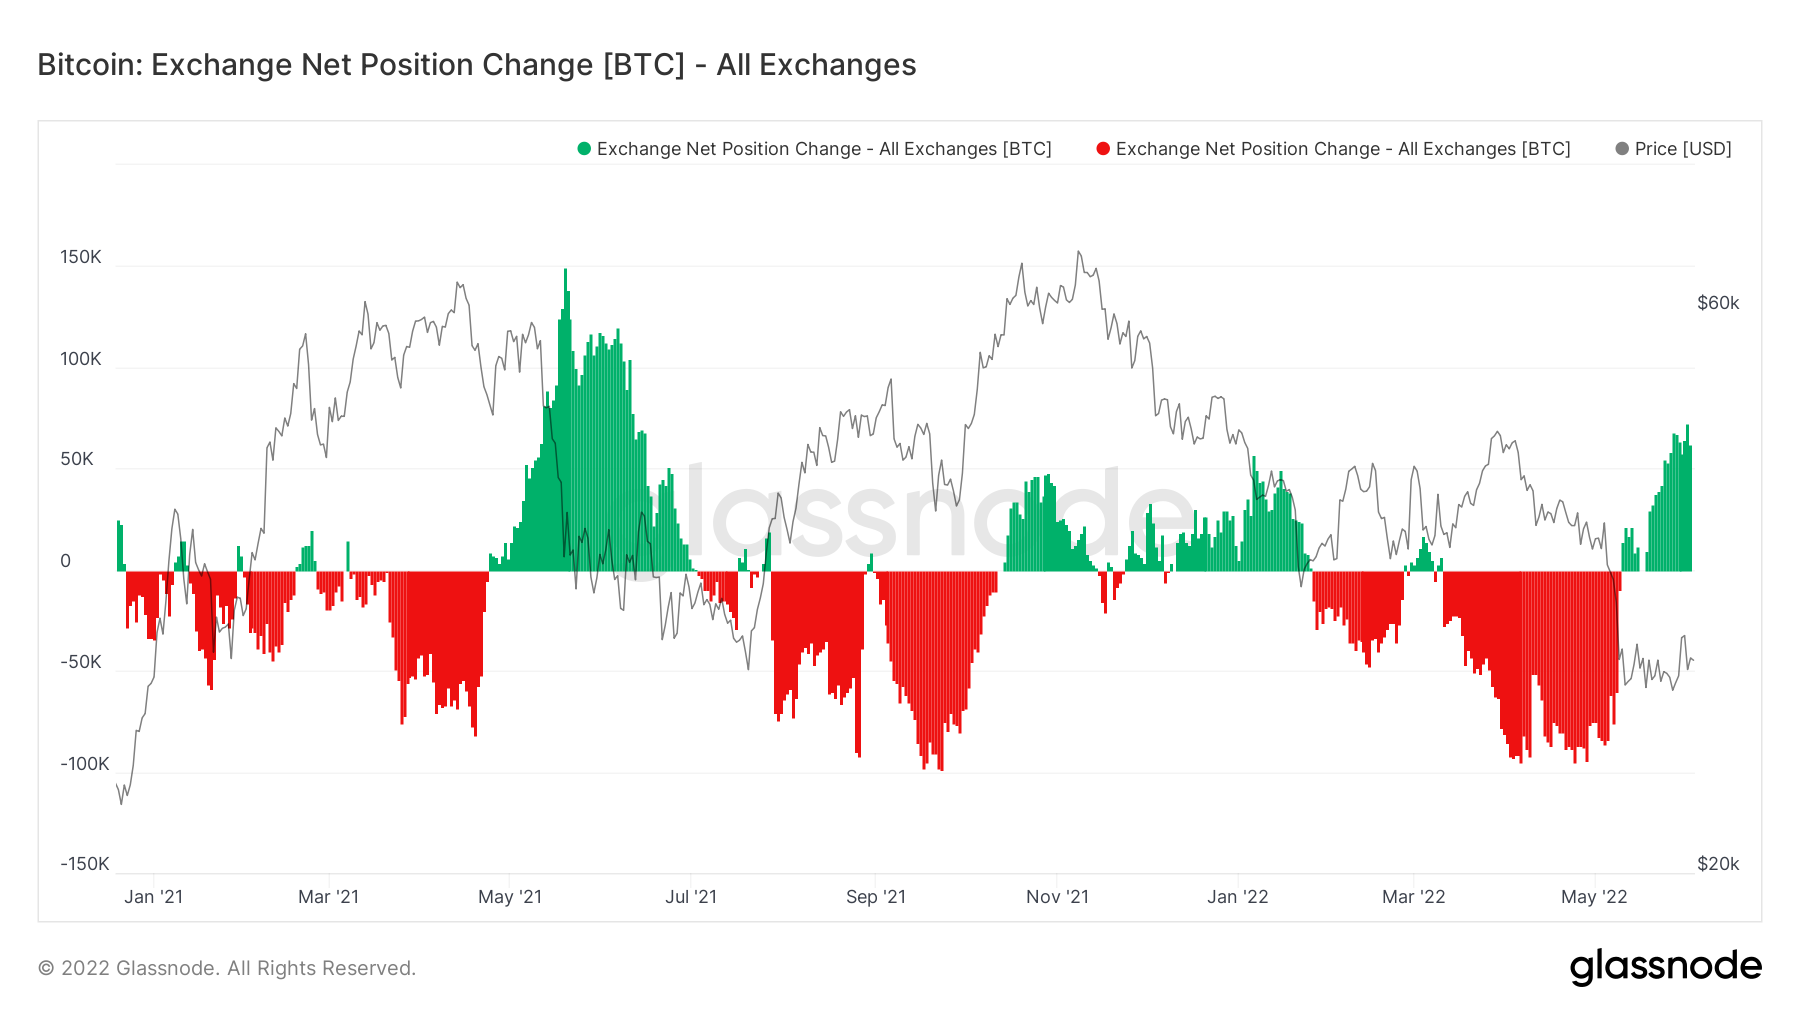 BTC exchange net position change